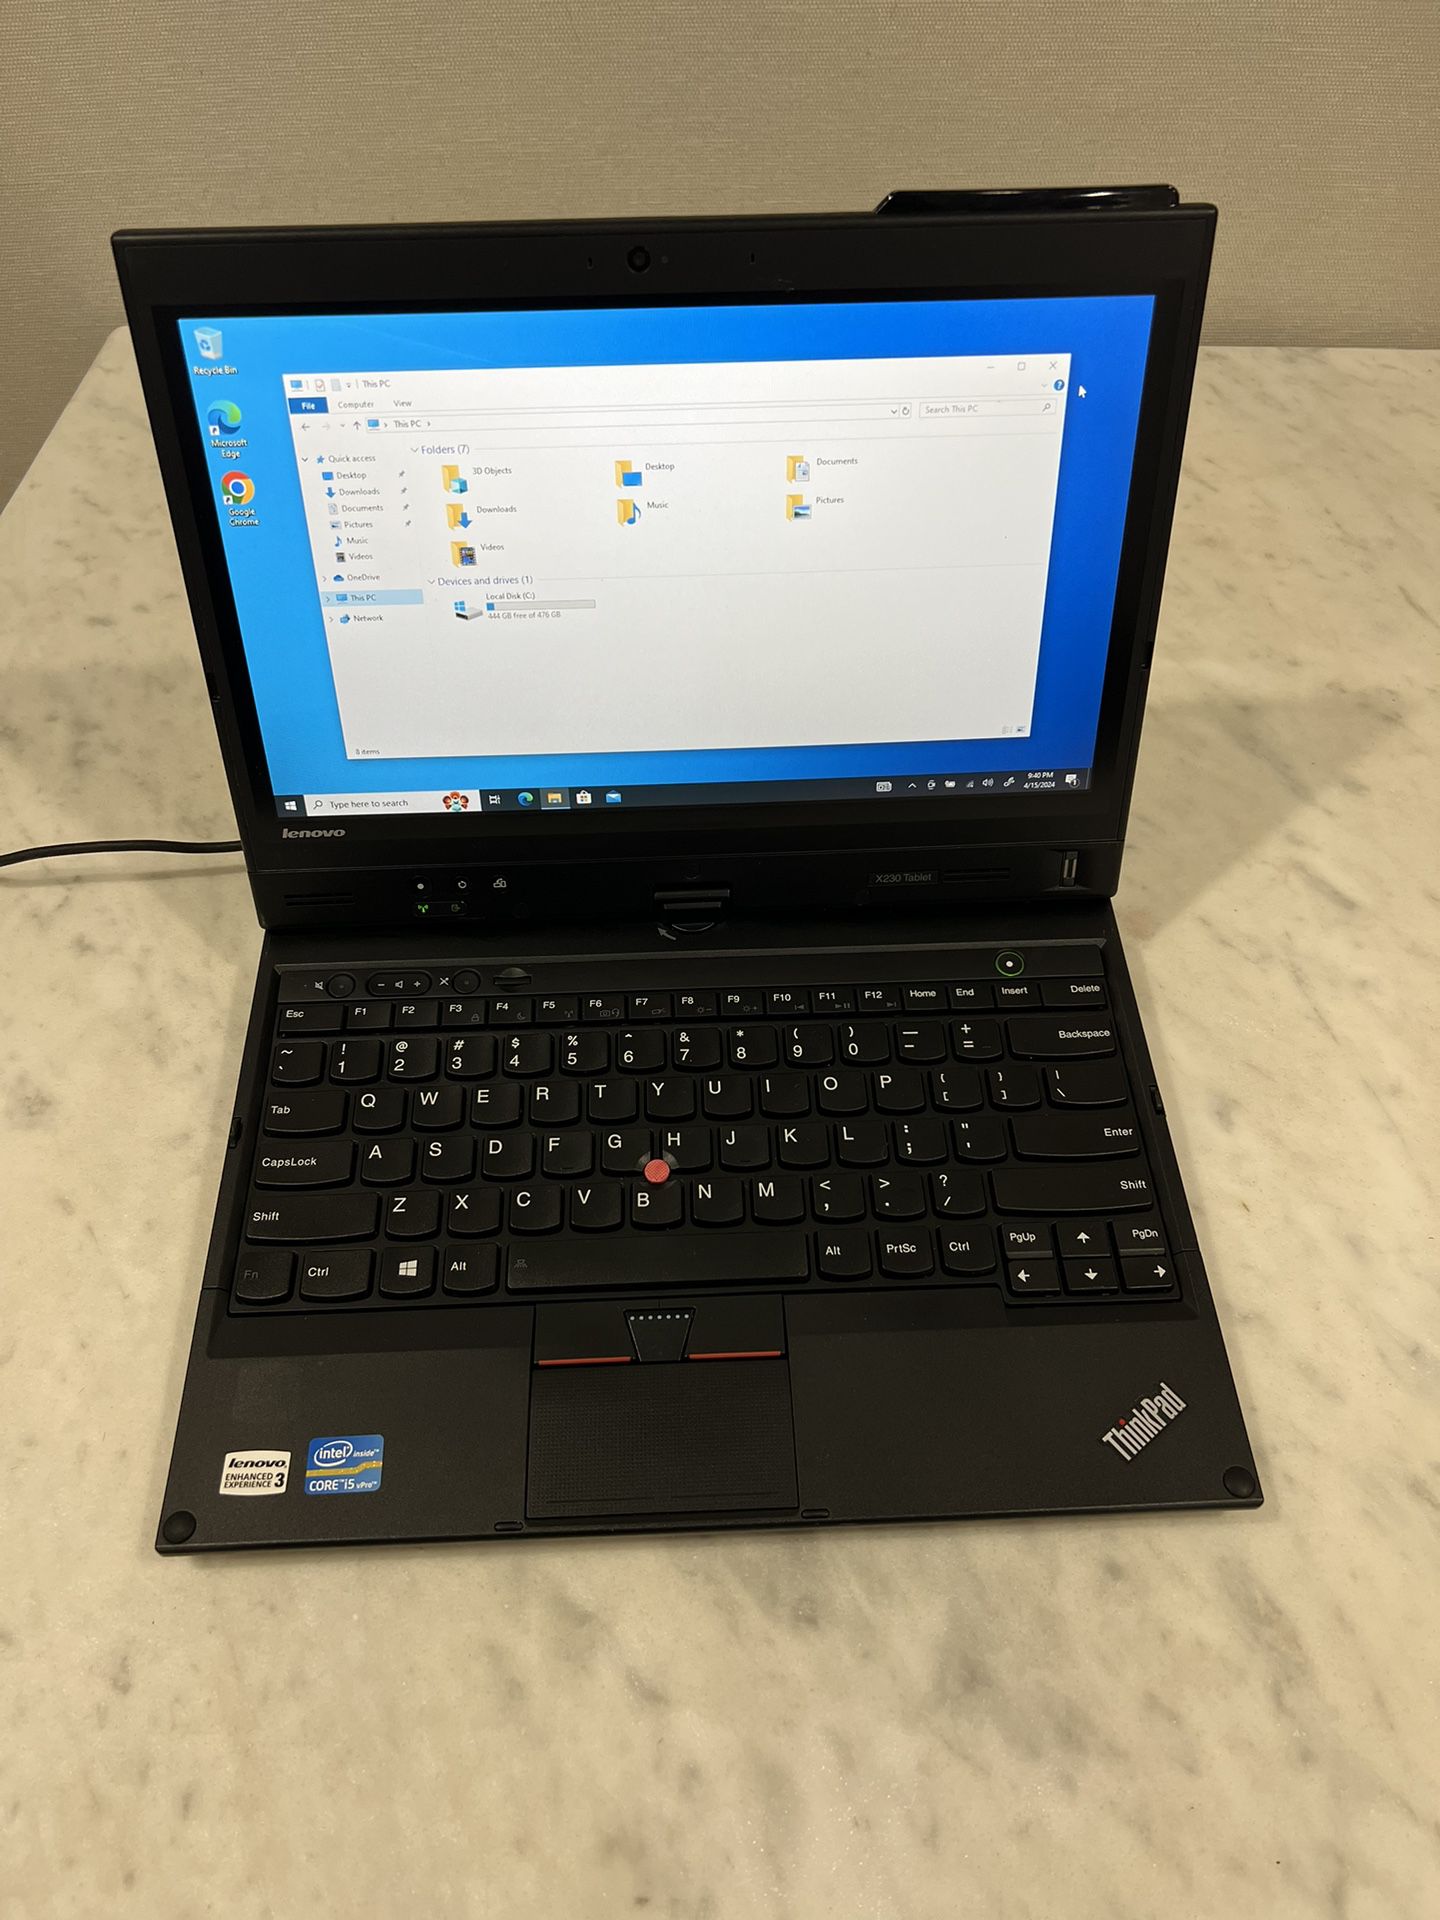 ThinkPad/Tablet Laptop